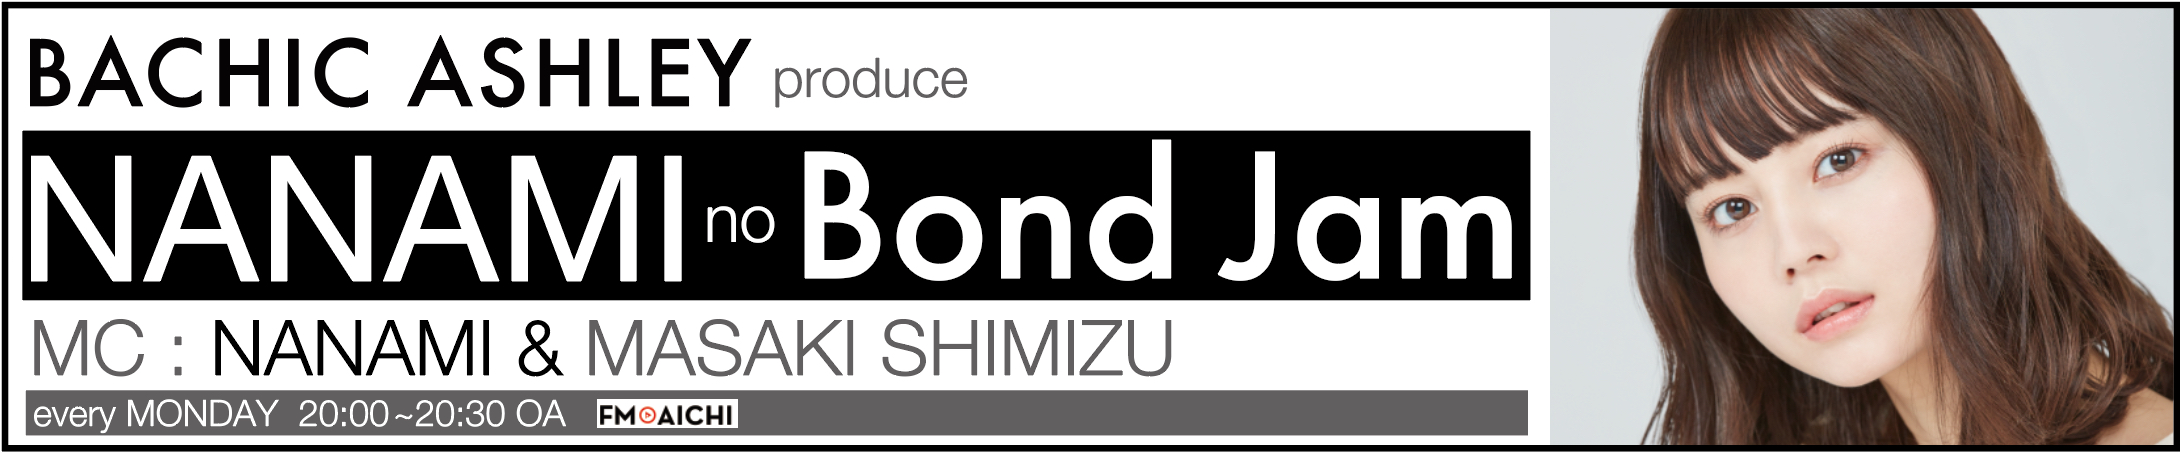 BACHIC ASHLEY produce「NANAMI no Bond Jam」